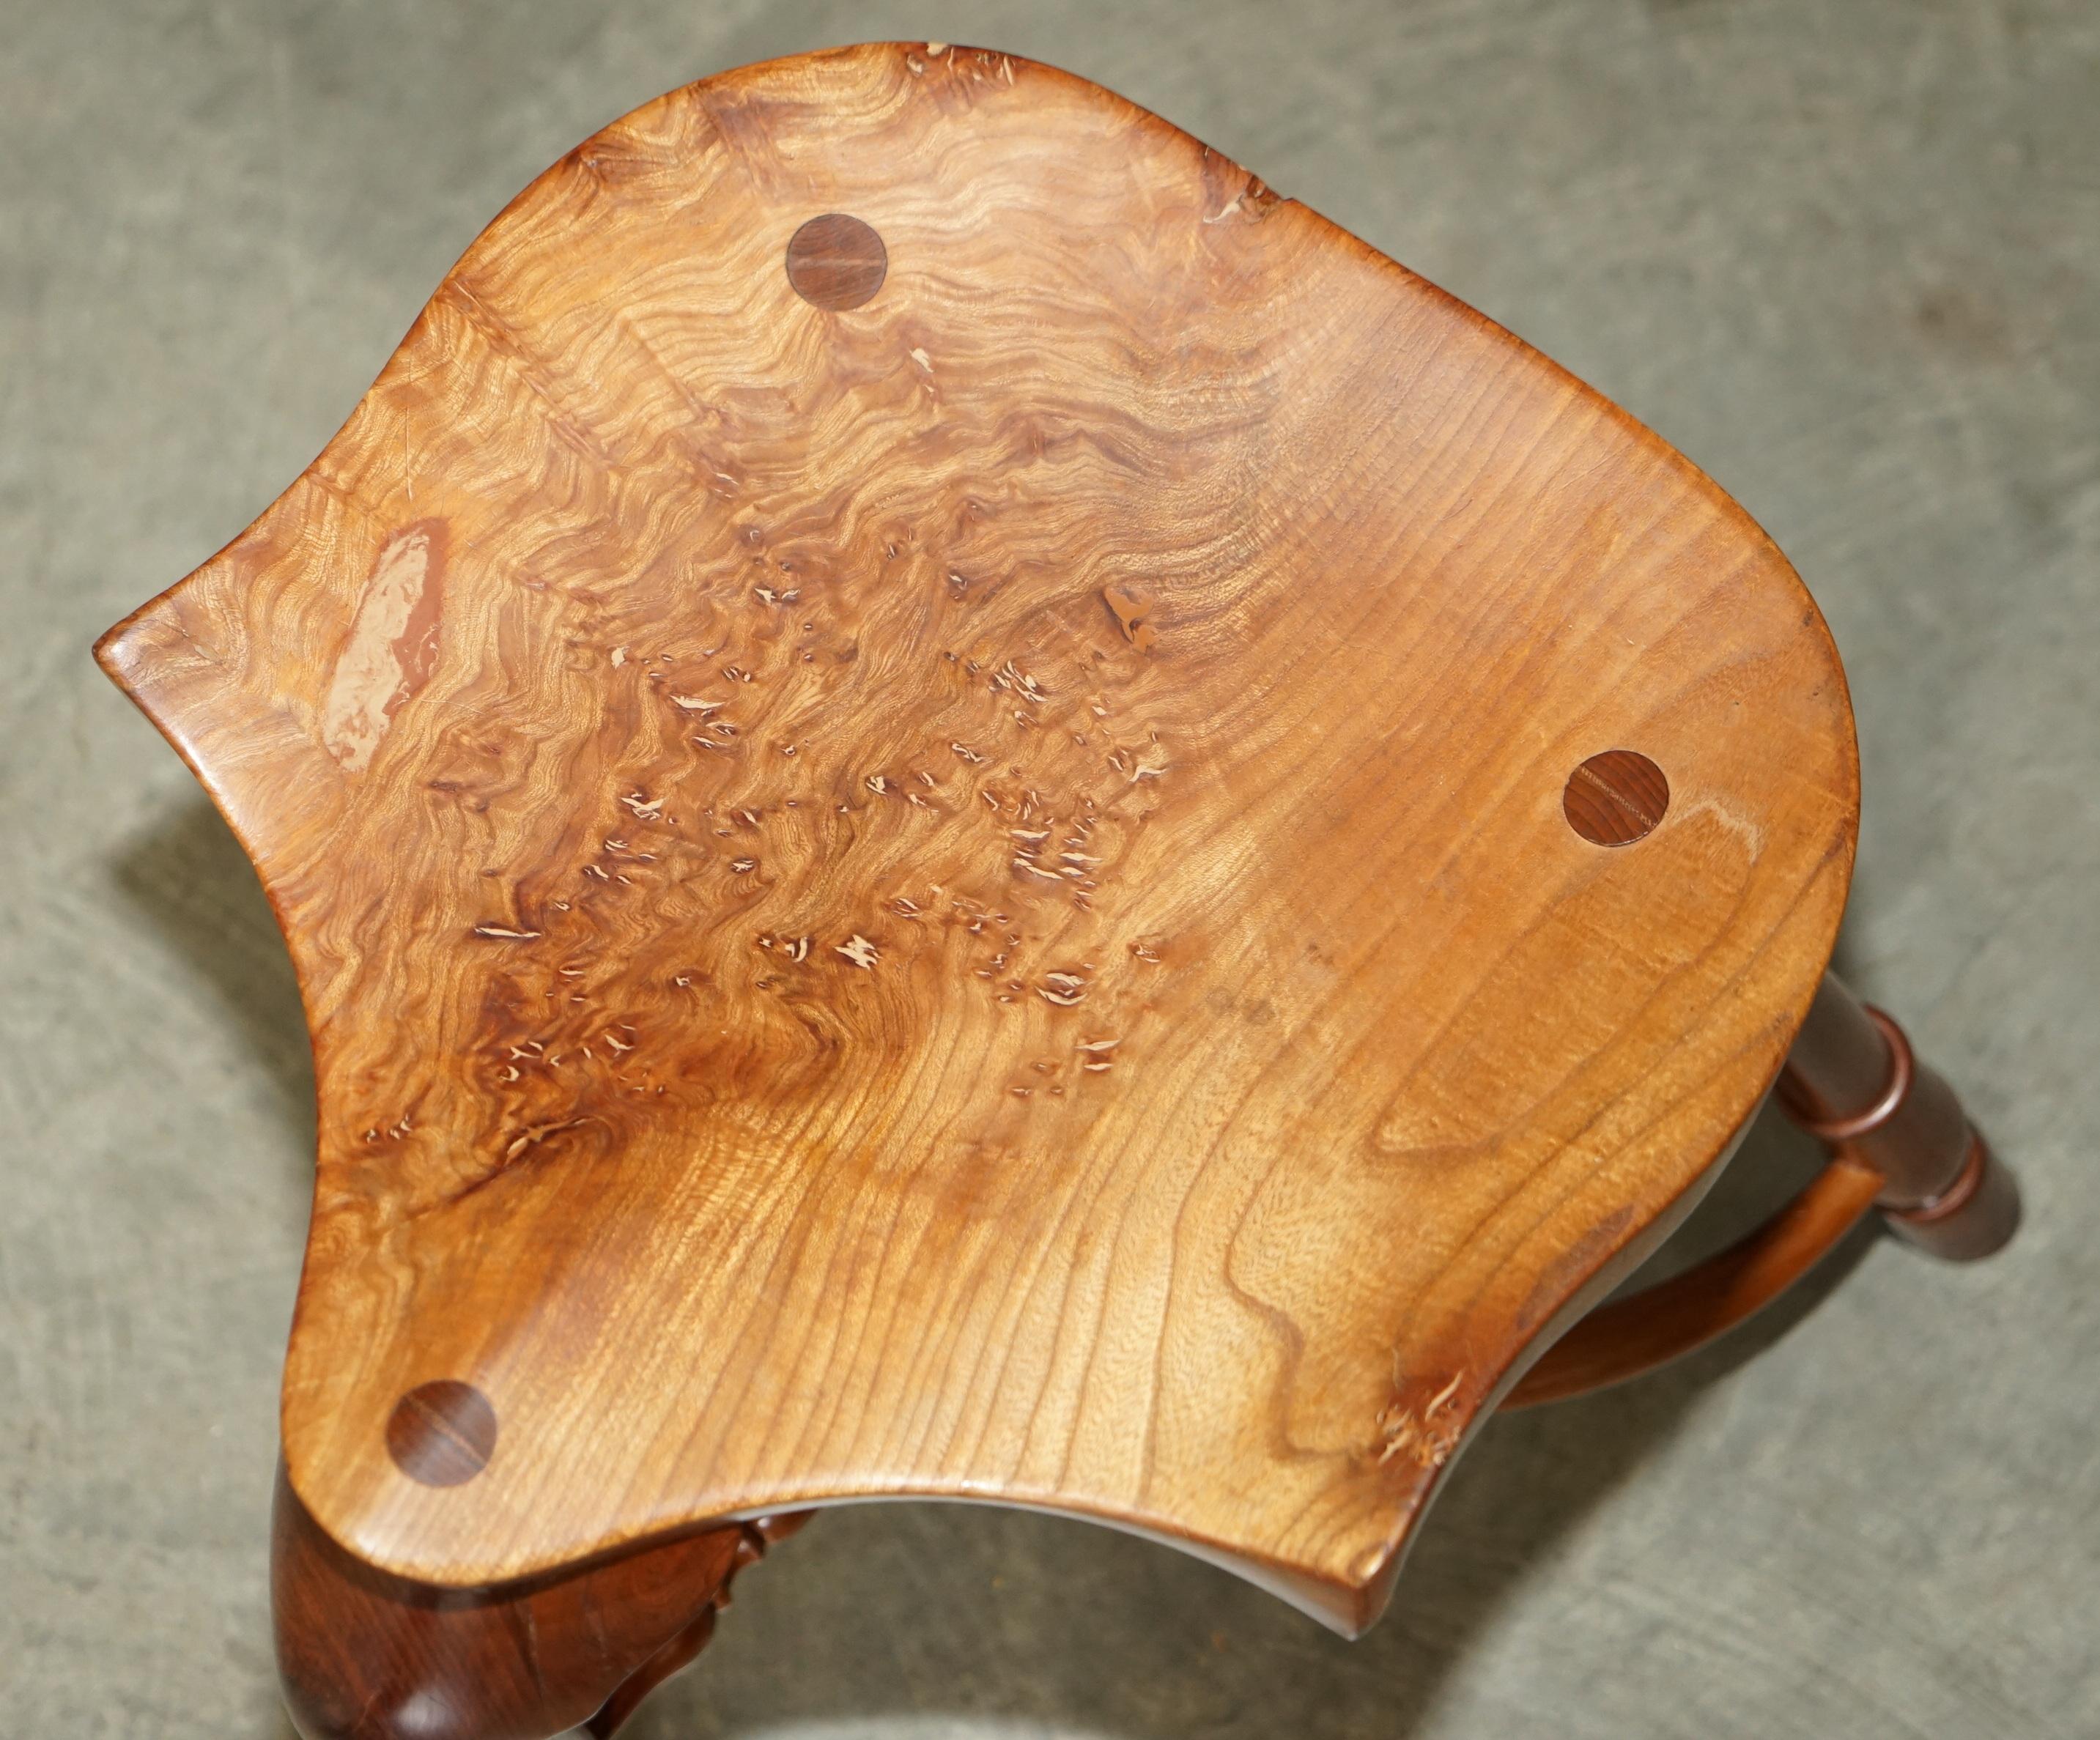 English Stunning Burr Yew Wood Vintage Three Legged Stool Very Decorative Timber Grain For Sale